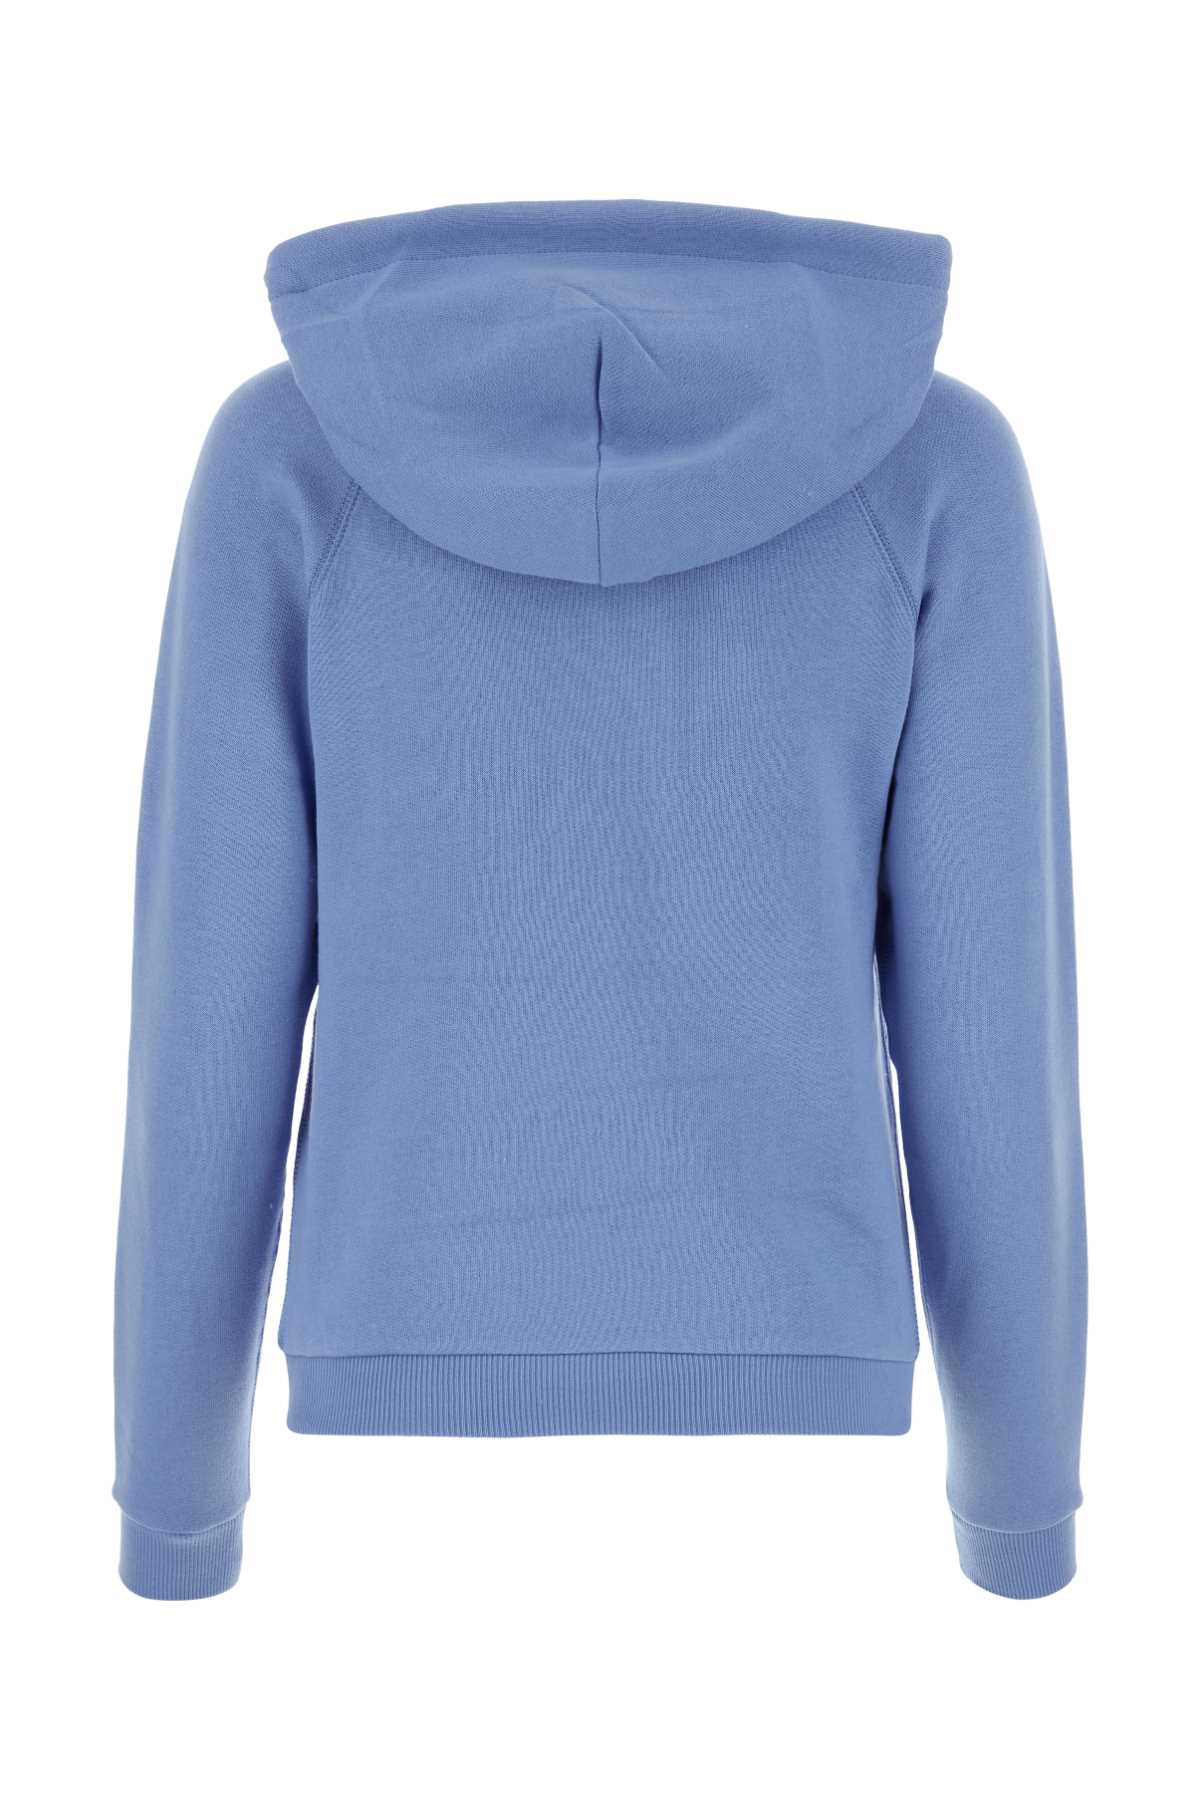 Polo Ralph Lauren Cerulean Blue Cotton Blend Sweatshirt In Summerblue